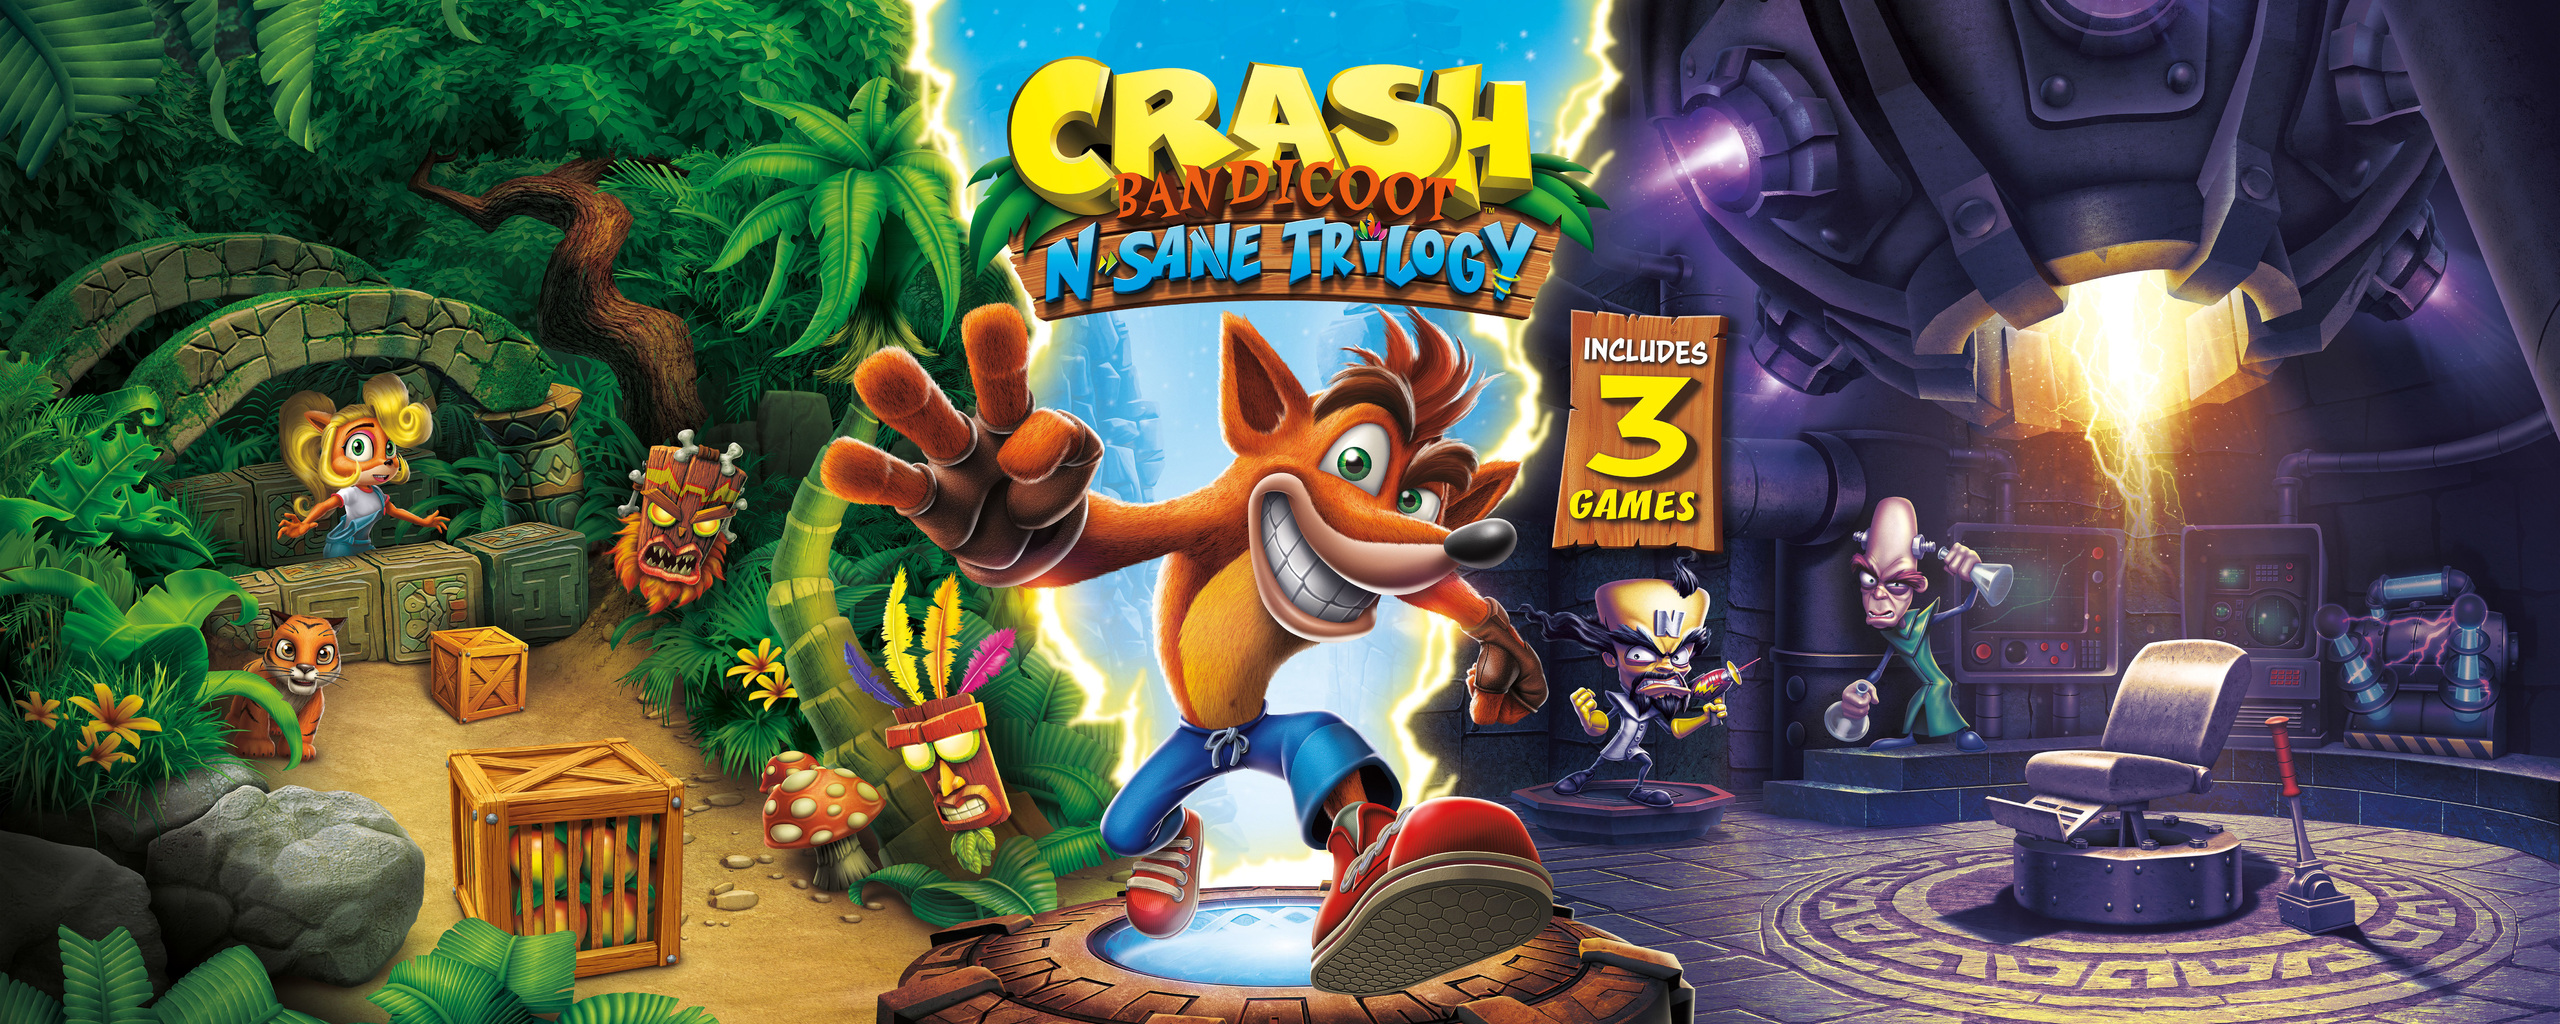 Crash Team Rumble review --- A Crash course in fun — GAMINGTREND